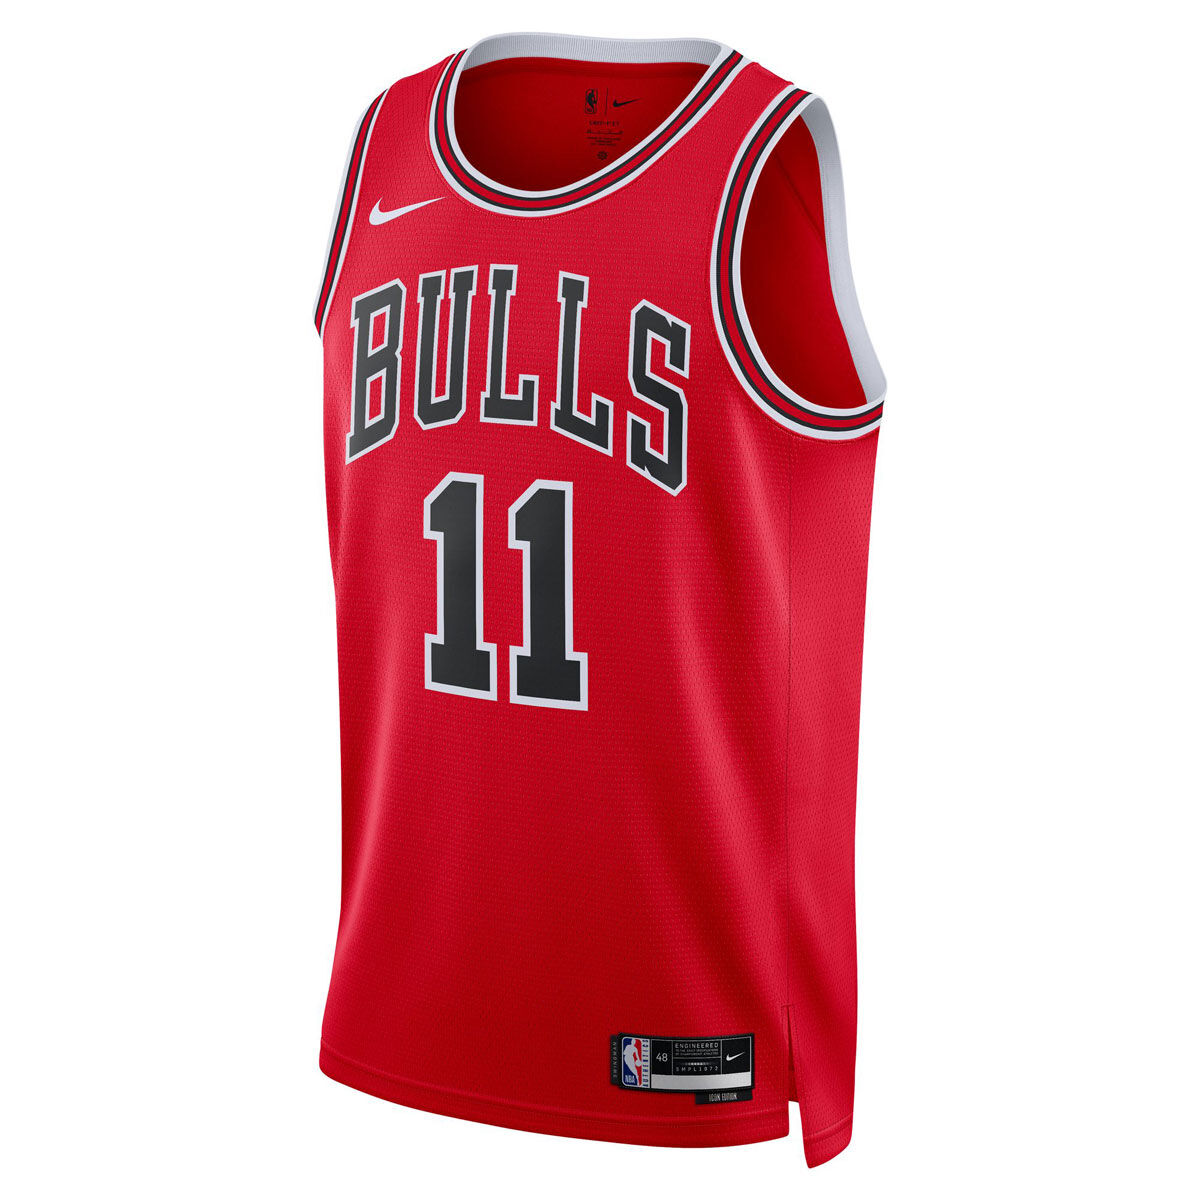 Best Toni Kukoc Chicago Bulls True Blue Fan Signature Shirt, hoodie,  sweater, long sleeve and tank top